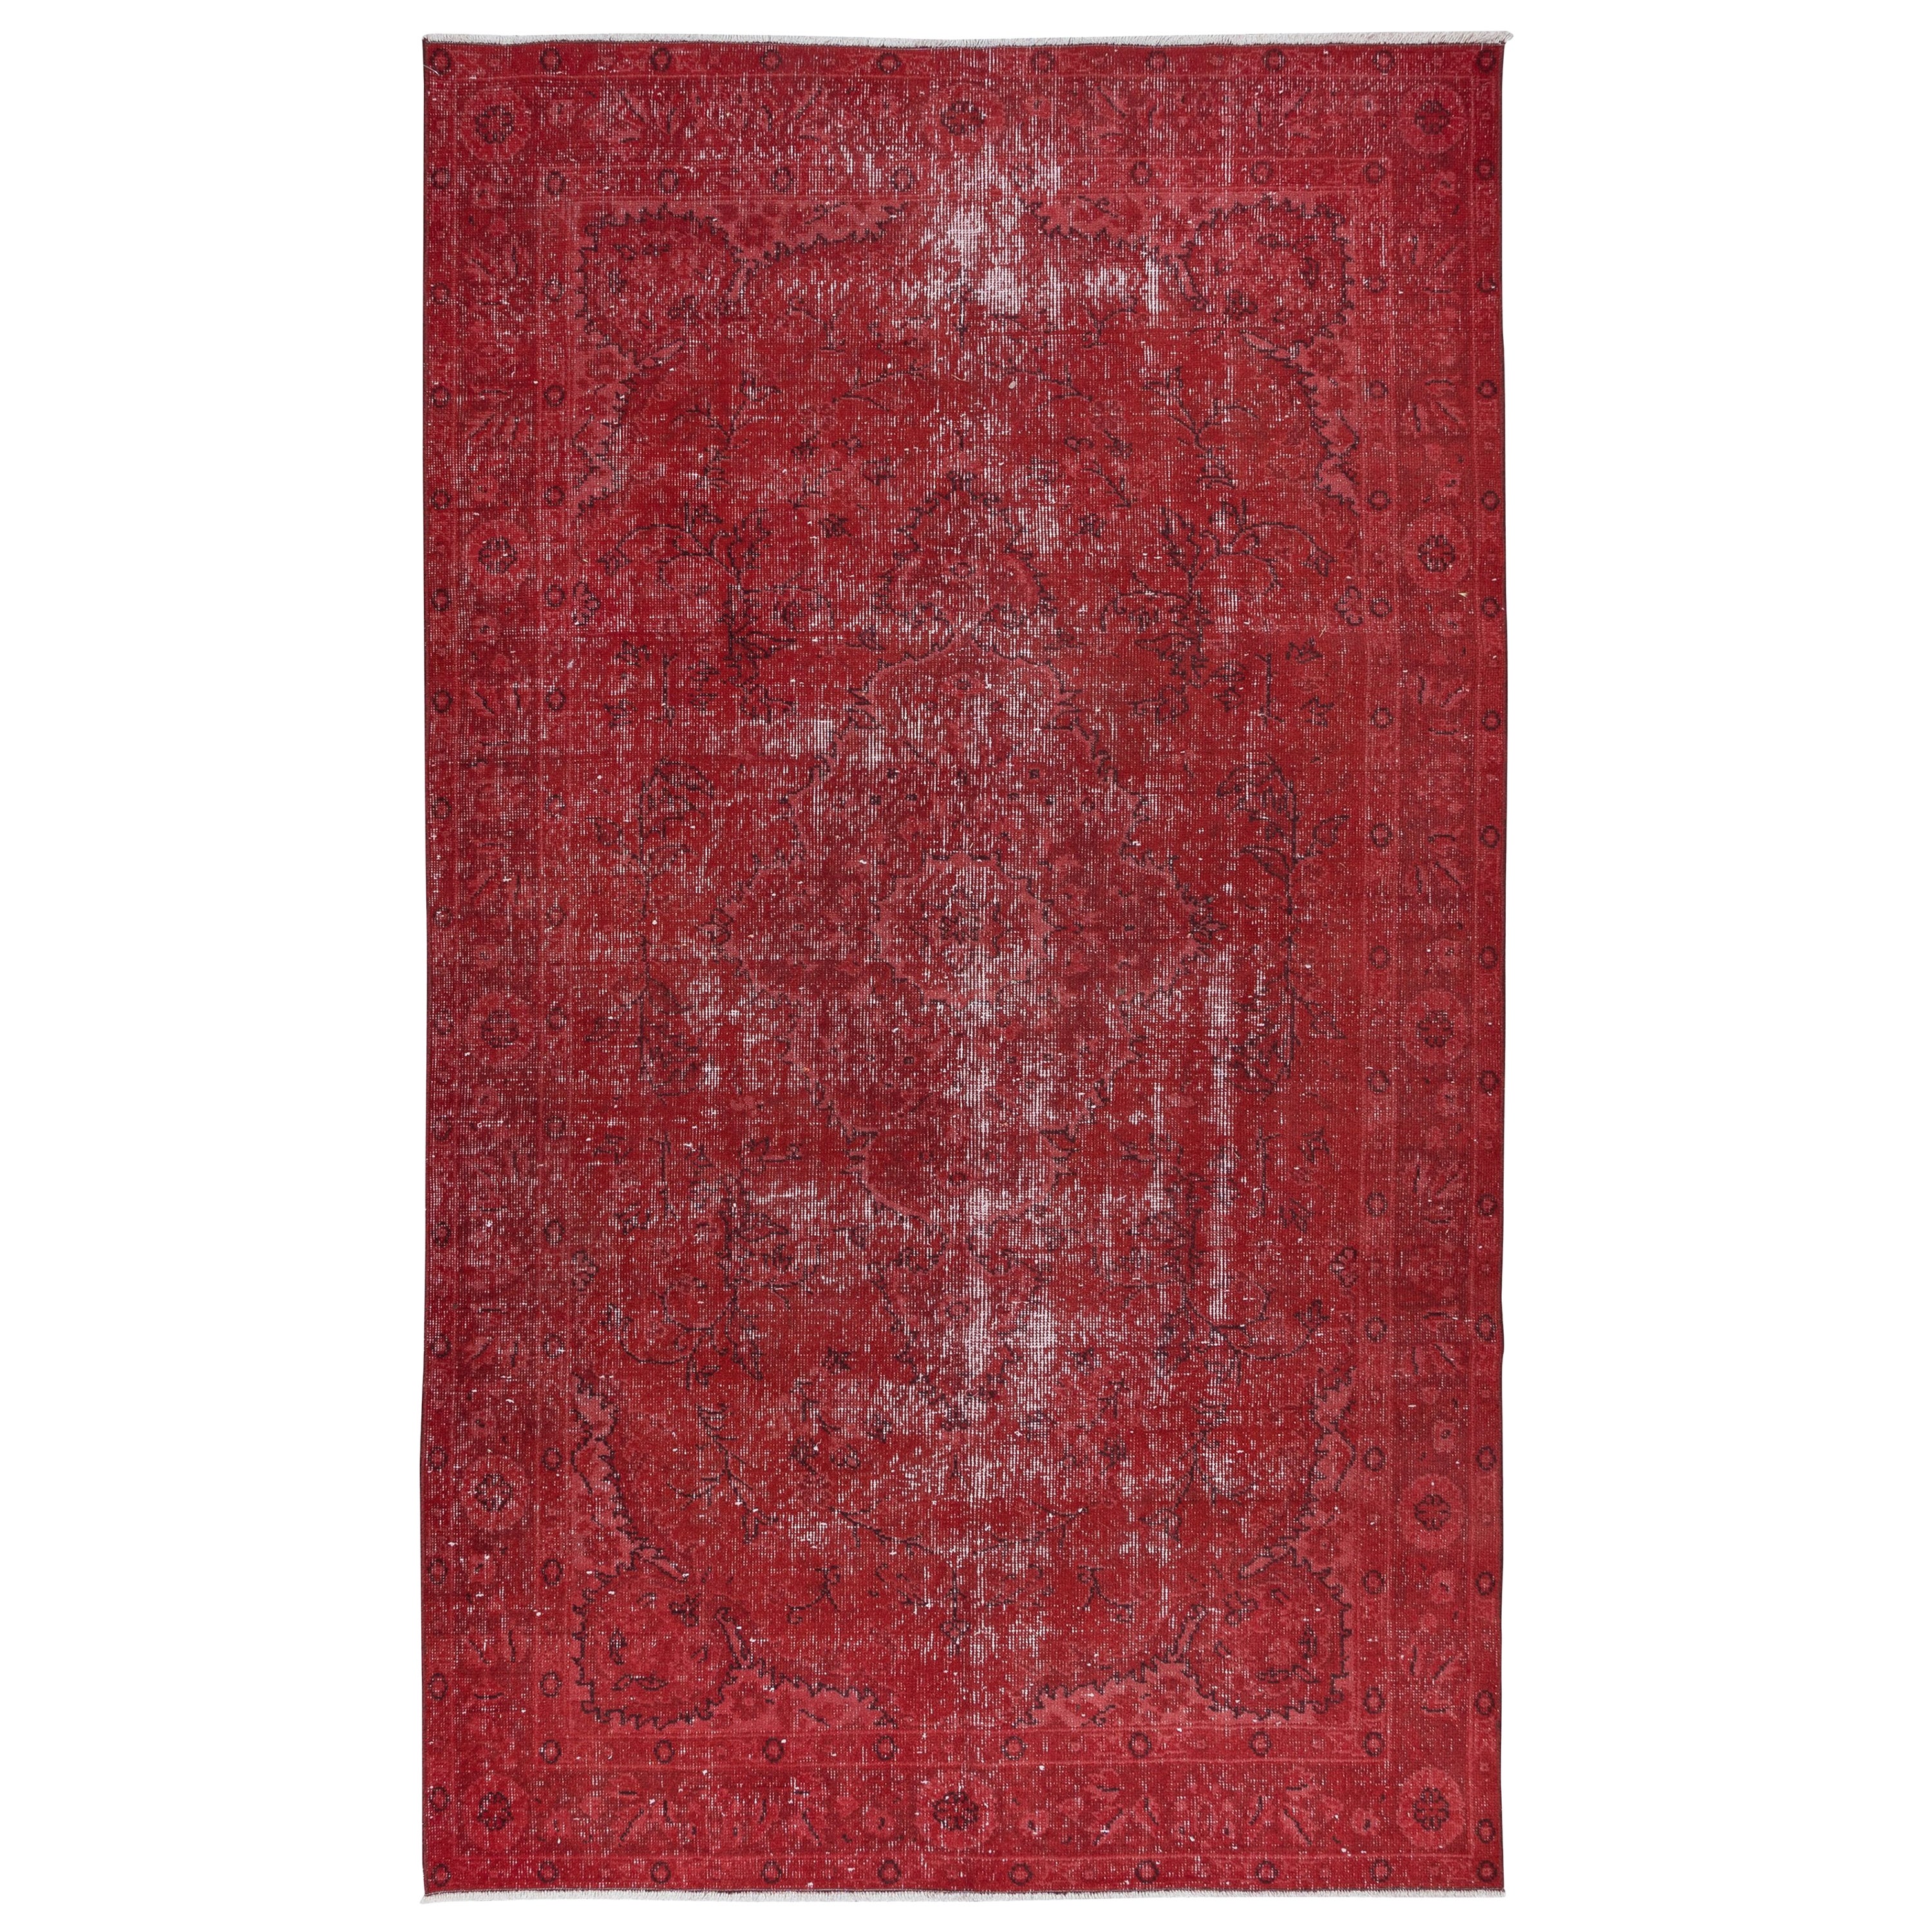 5.2x8.8 Ft Red Turkish Rug, Handmade Bohemian & Eclectic Carpet